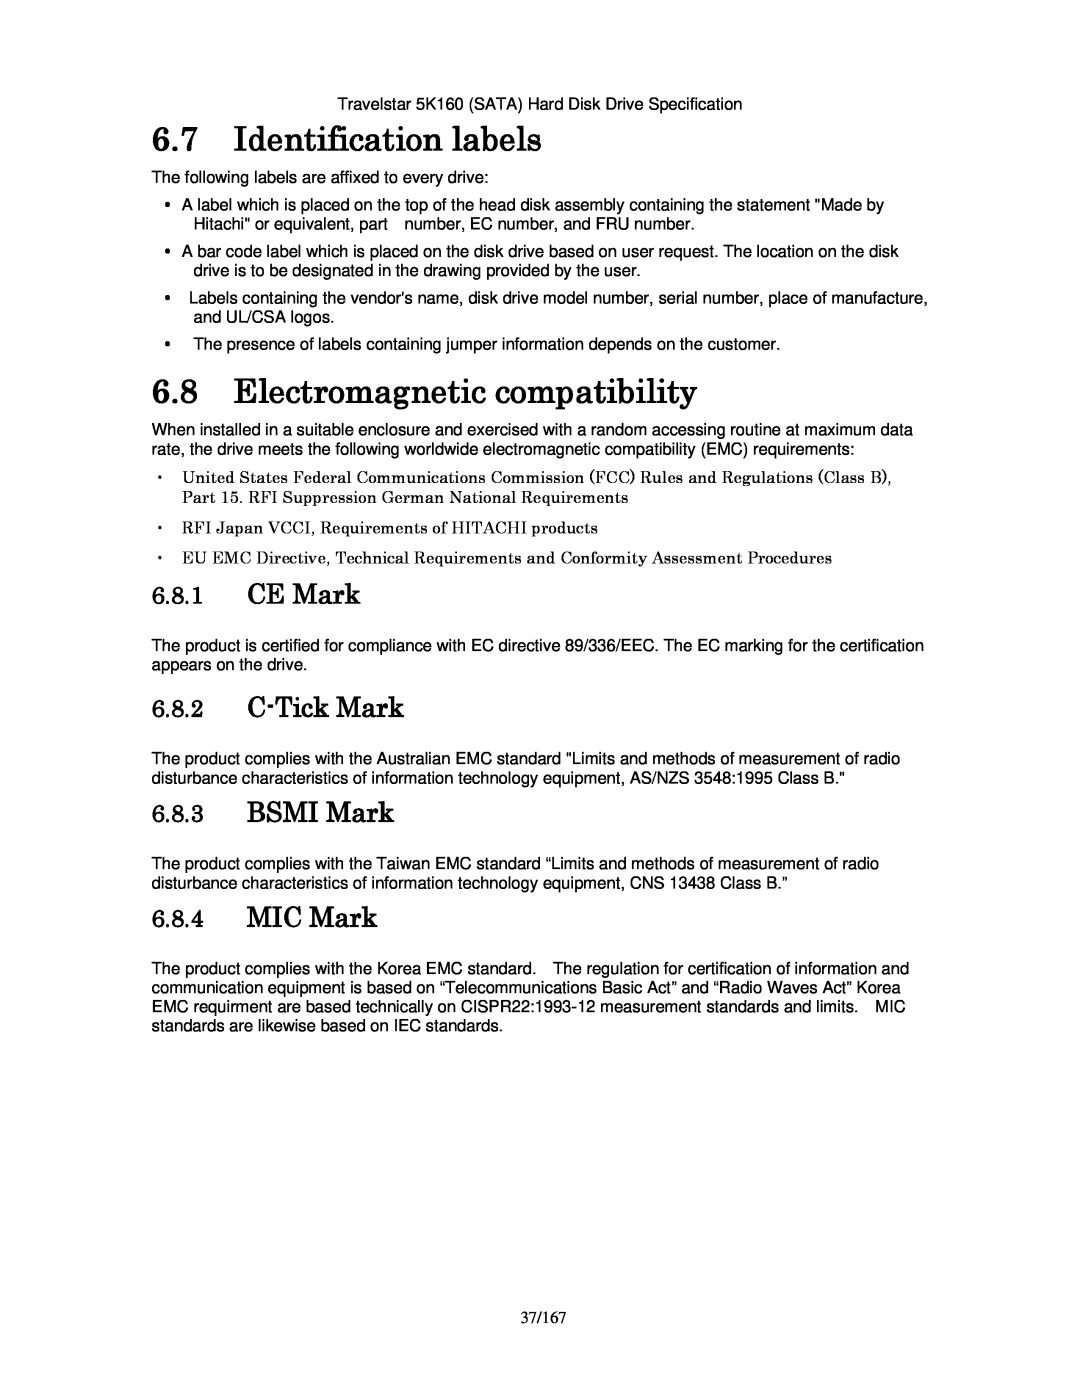 Hitachi HTS541616J9SA00 Identification labels, Electromagnetic compatibility, CE Mark, C-Tick Mark, BSMI Mark, MIC Mark 